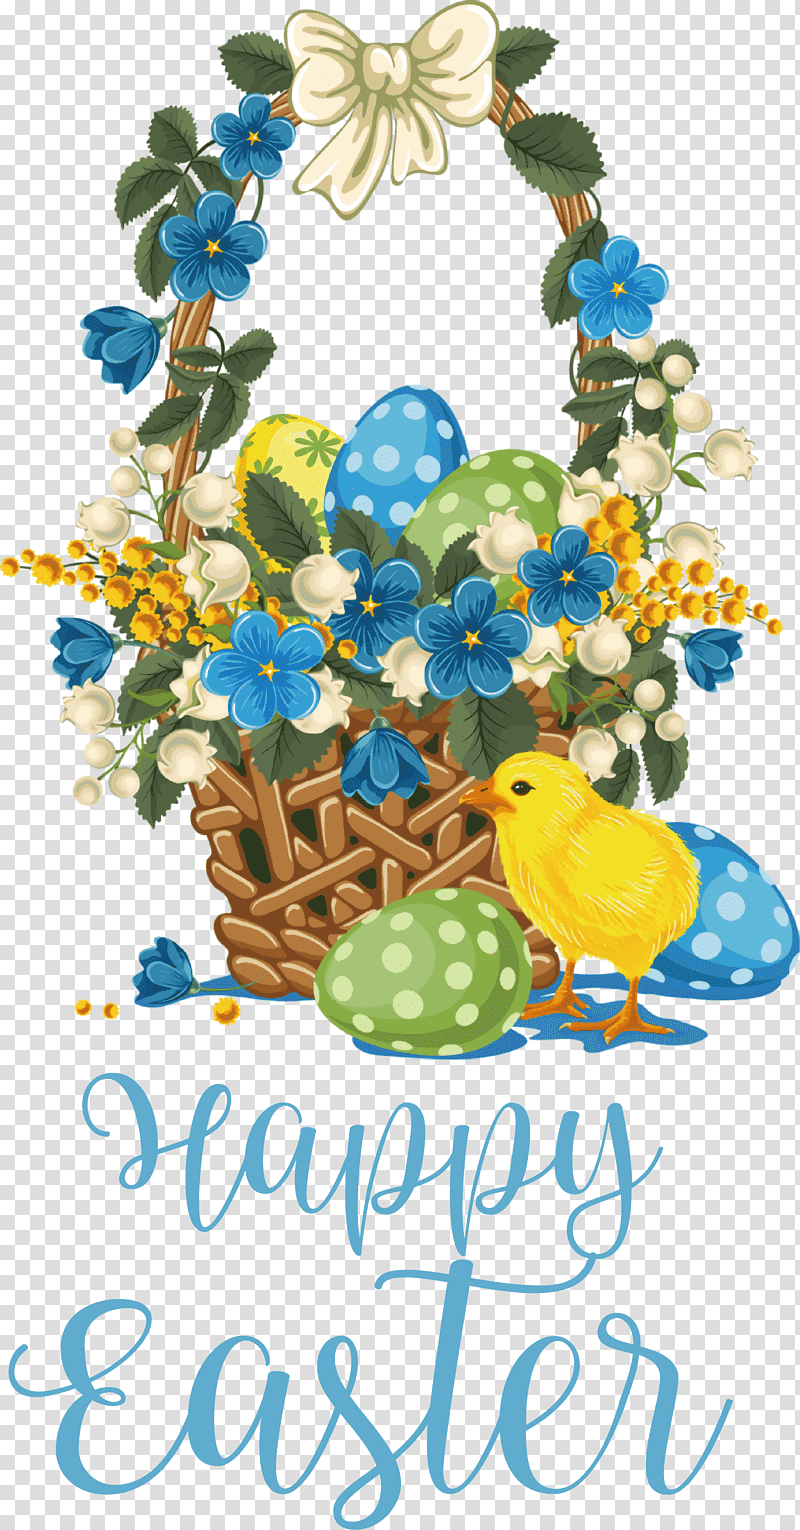 Happy Easter chicken and ducklings, Easter Bunny, Easter Basket, Easter Postcard, Easter Egg, Holiday, Royaltyfree transparent background PNG clipart